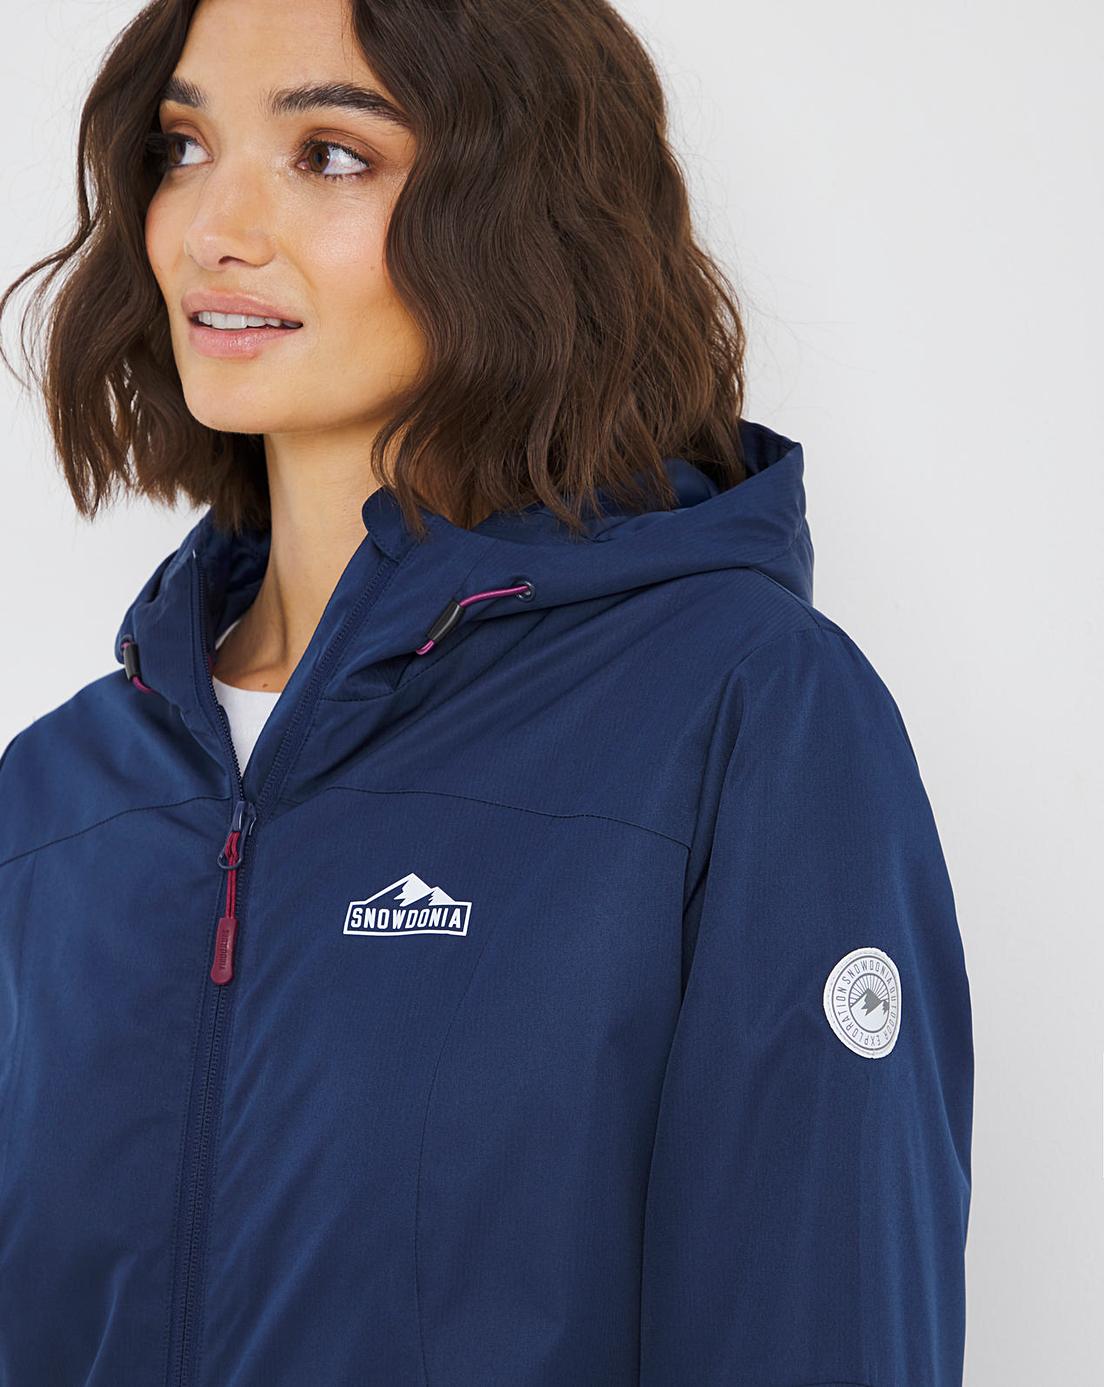 Snowdonia Insulated Waterproof Jacket | J D Williams